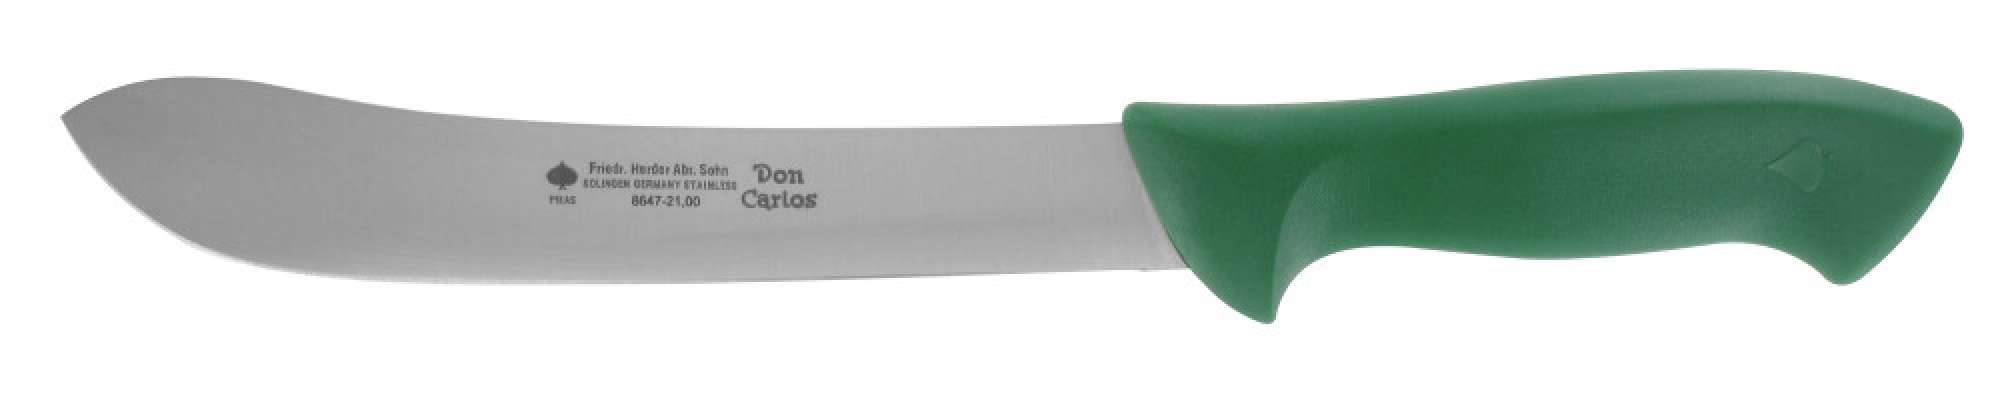 Friedrich Herder Slaughtering knife | 210 mm | Stainless | Knives 